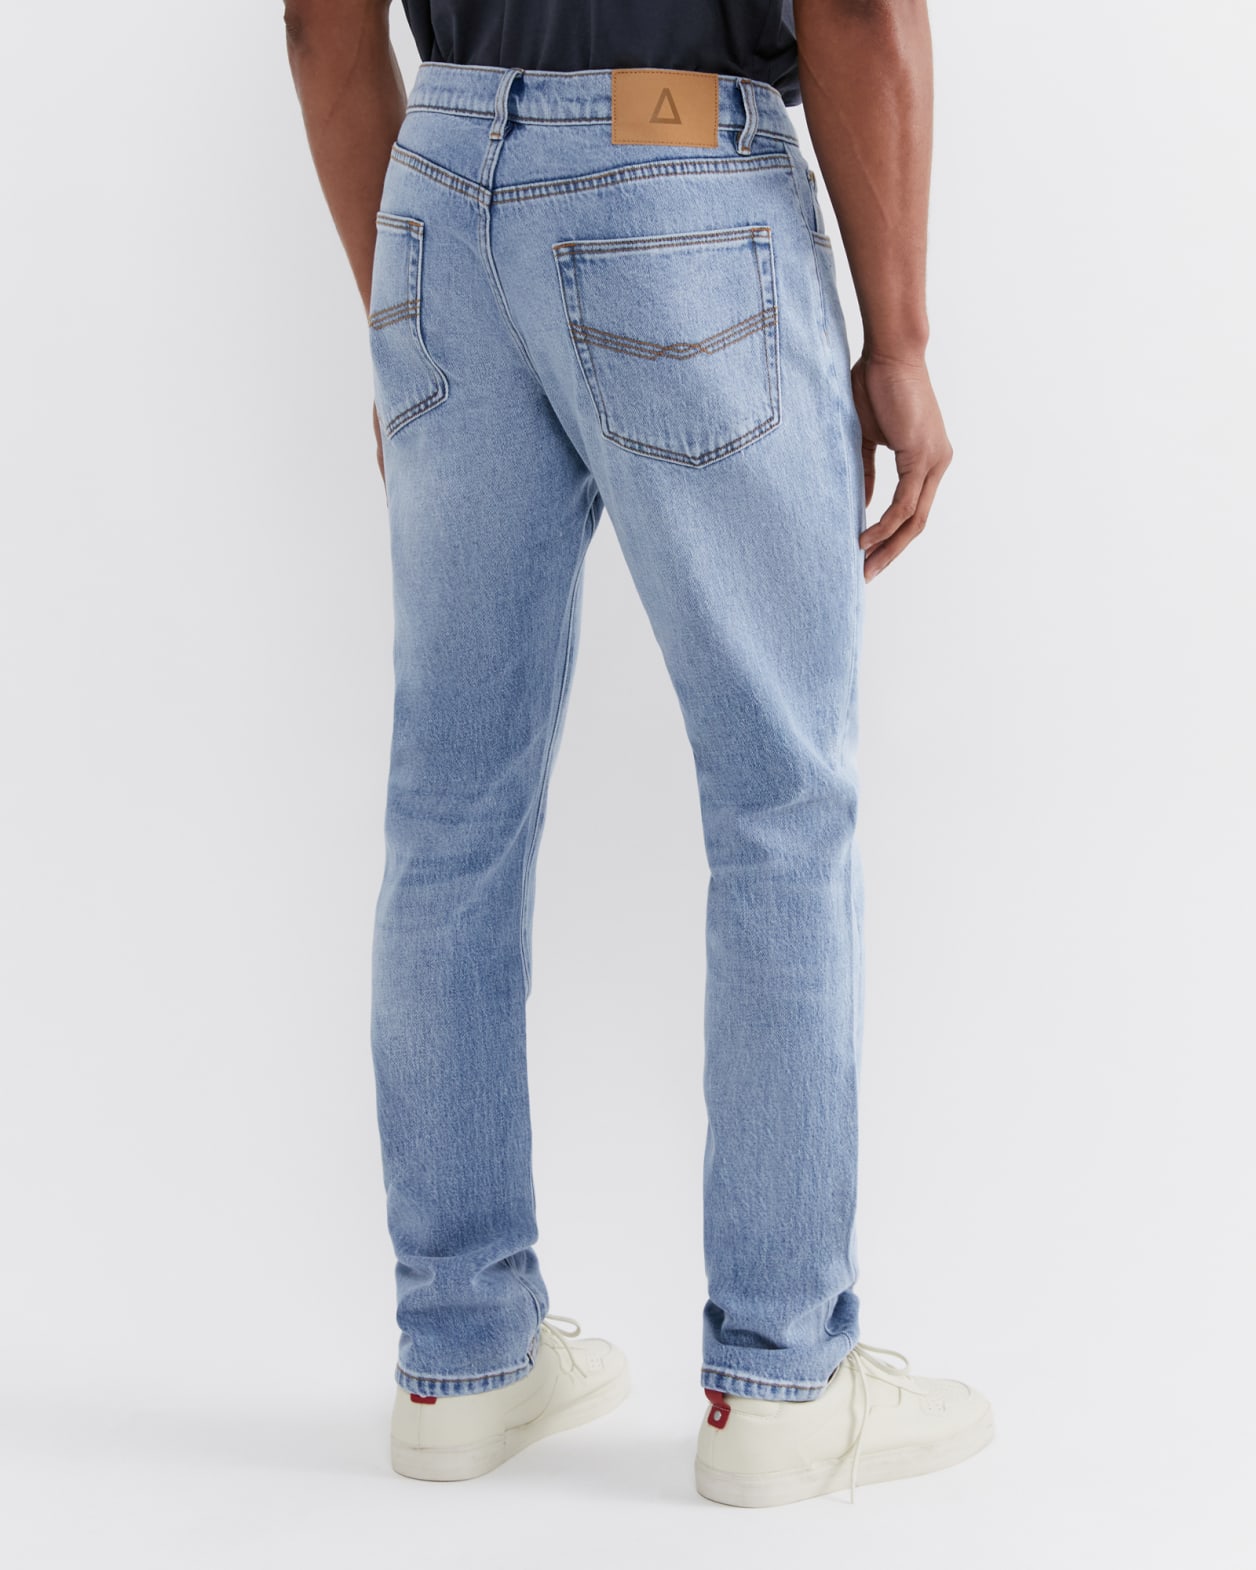 Stan Slim Jeans in BLASTED MID WASH